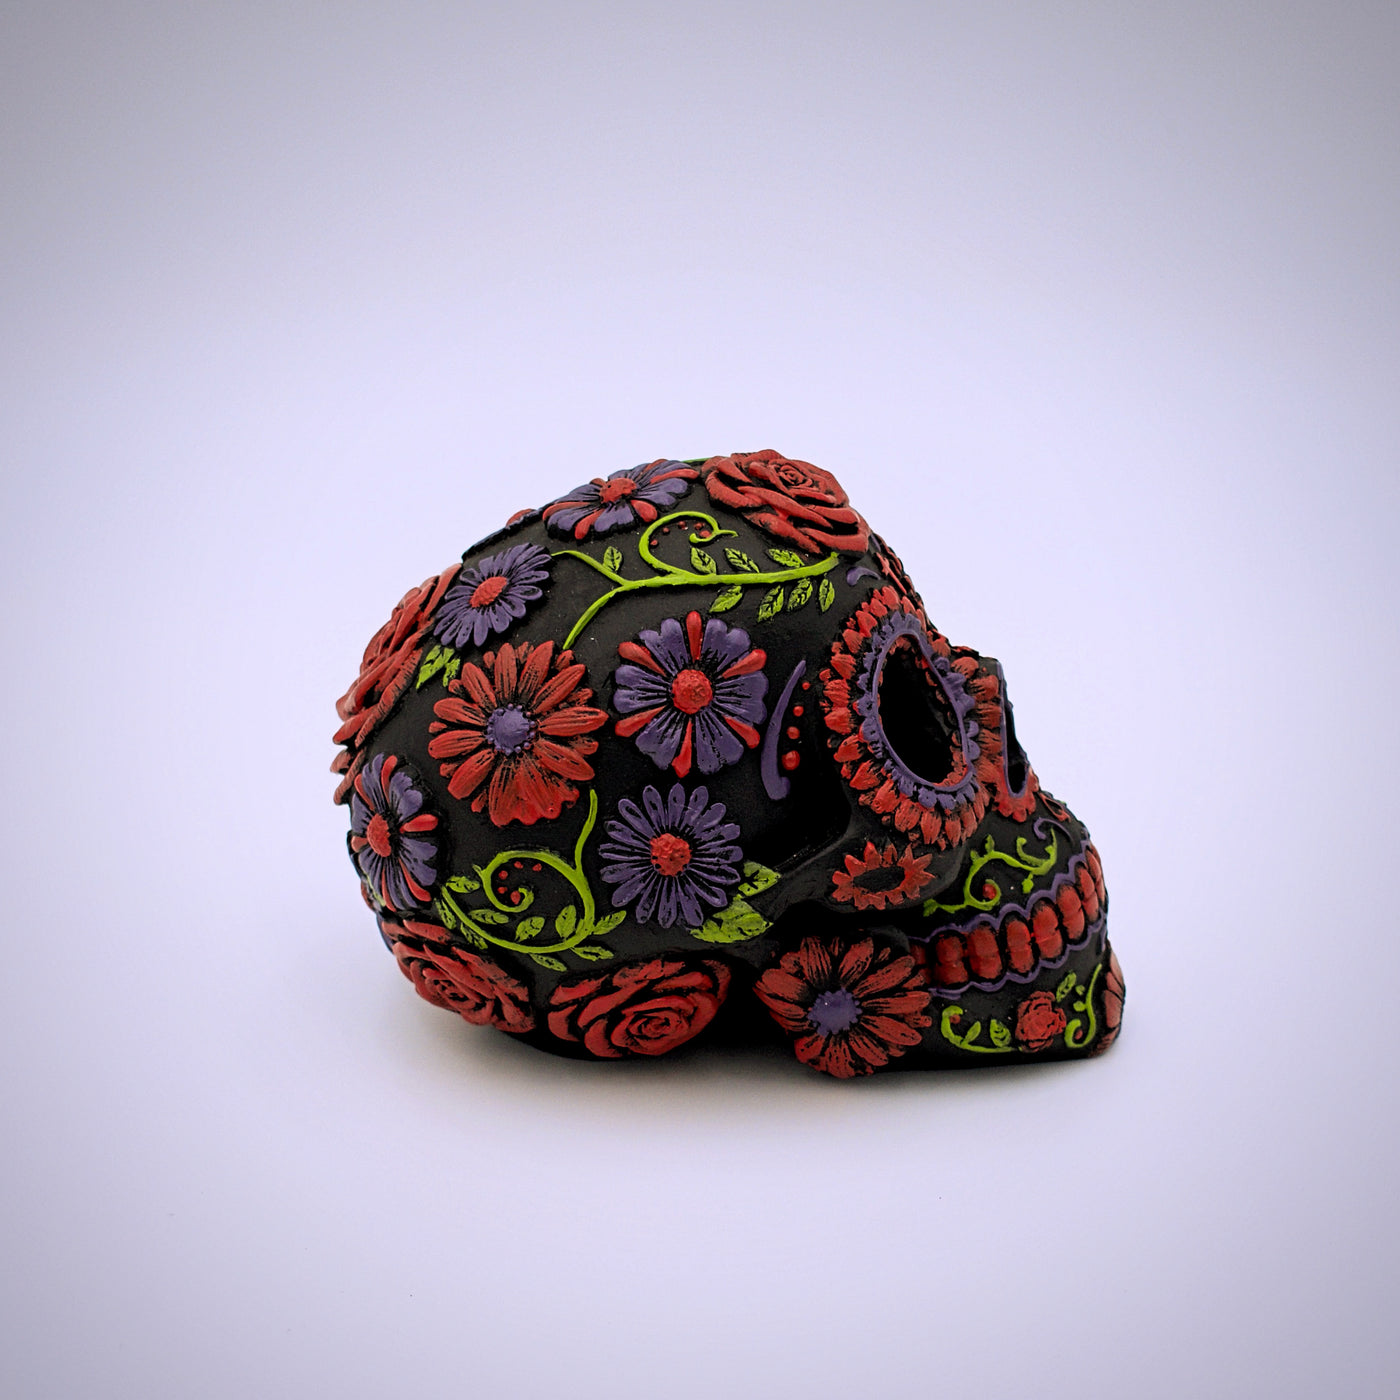 Bloom Design Sugar Skull Sculpture - The Cranio Collections